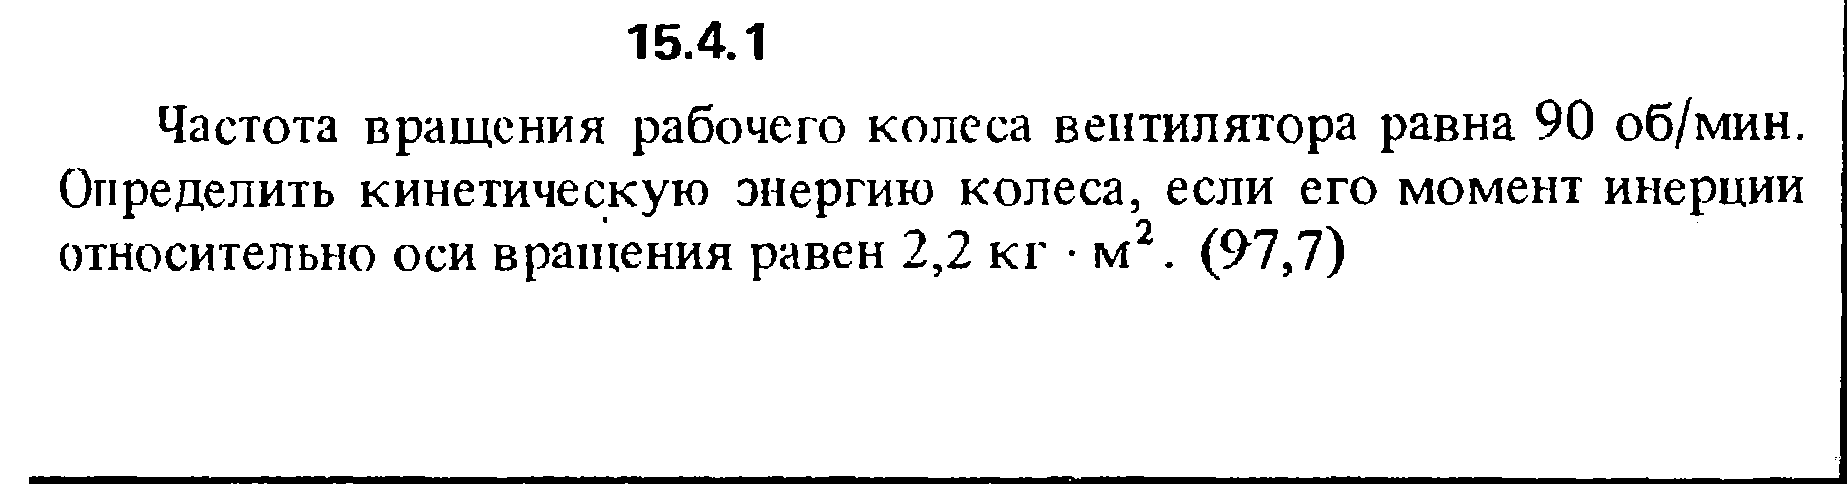 Решение задачи 15.4.1 из сборника Кепе О.Е. 1989 года